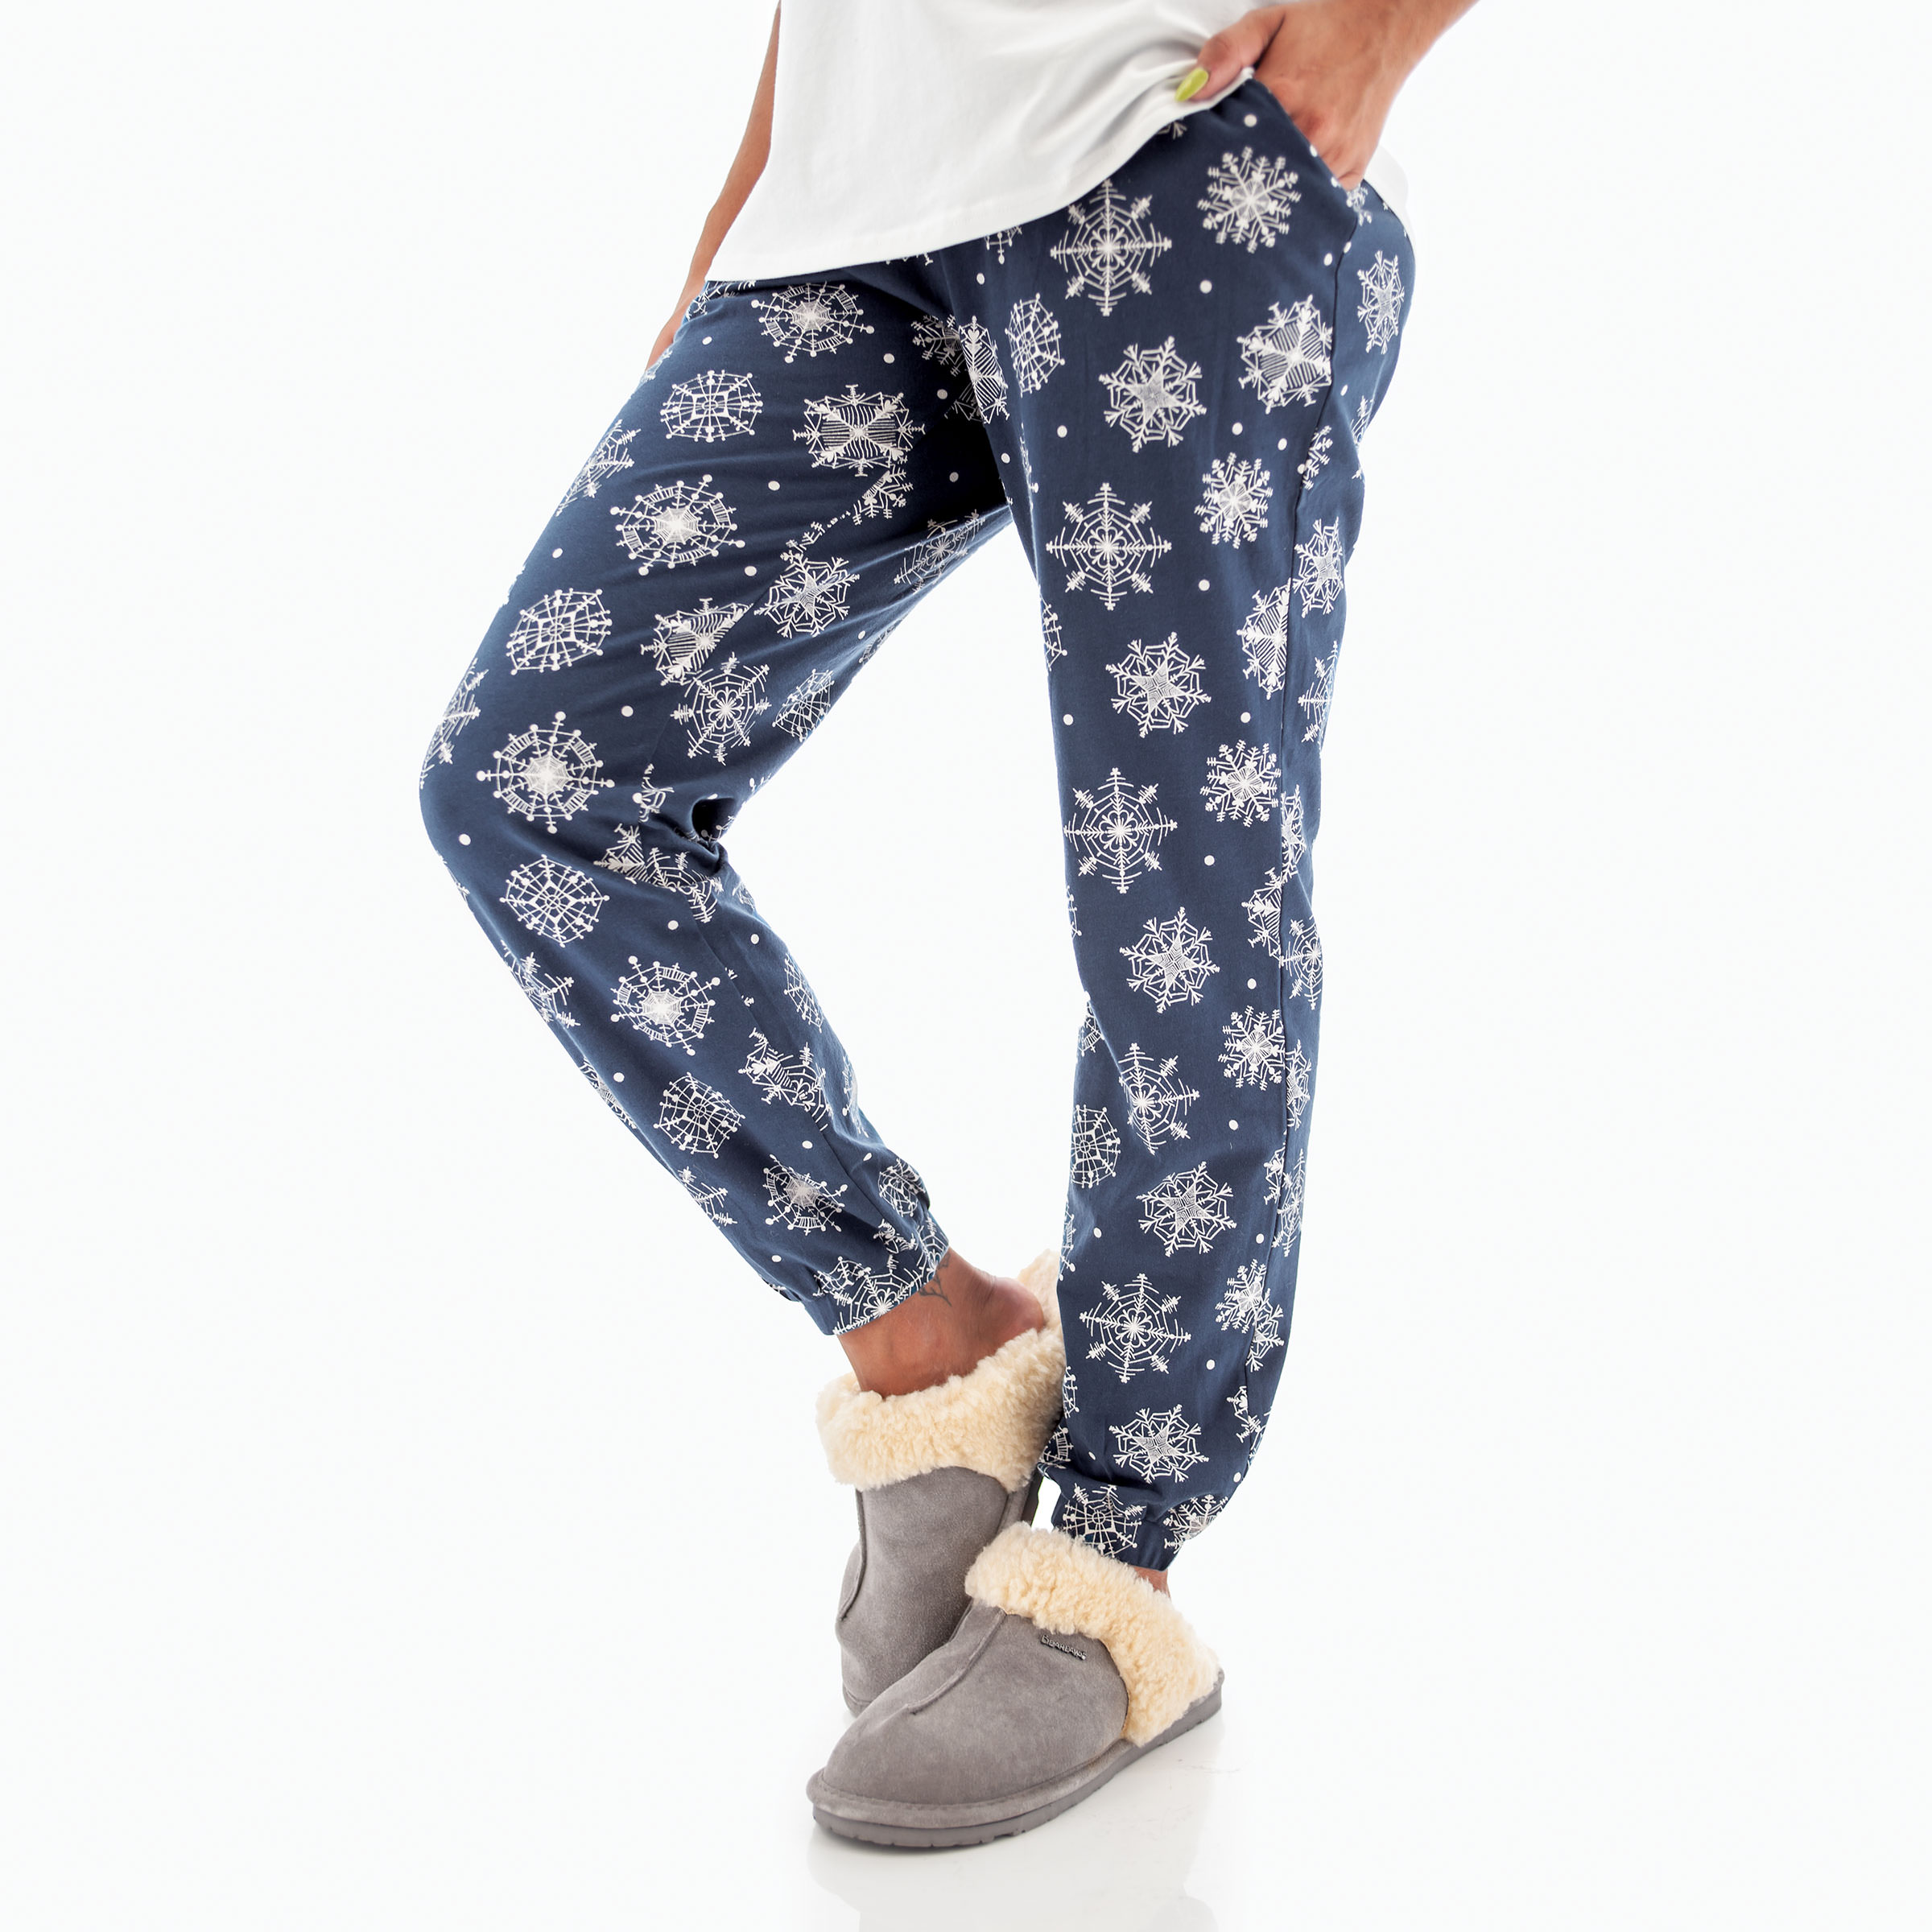 Women's Narah Pants by Soft Surroundings, in Blue White Geo size M (10-12)  - Yahoo Shopping